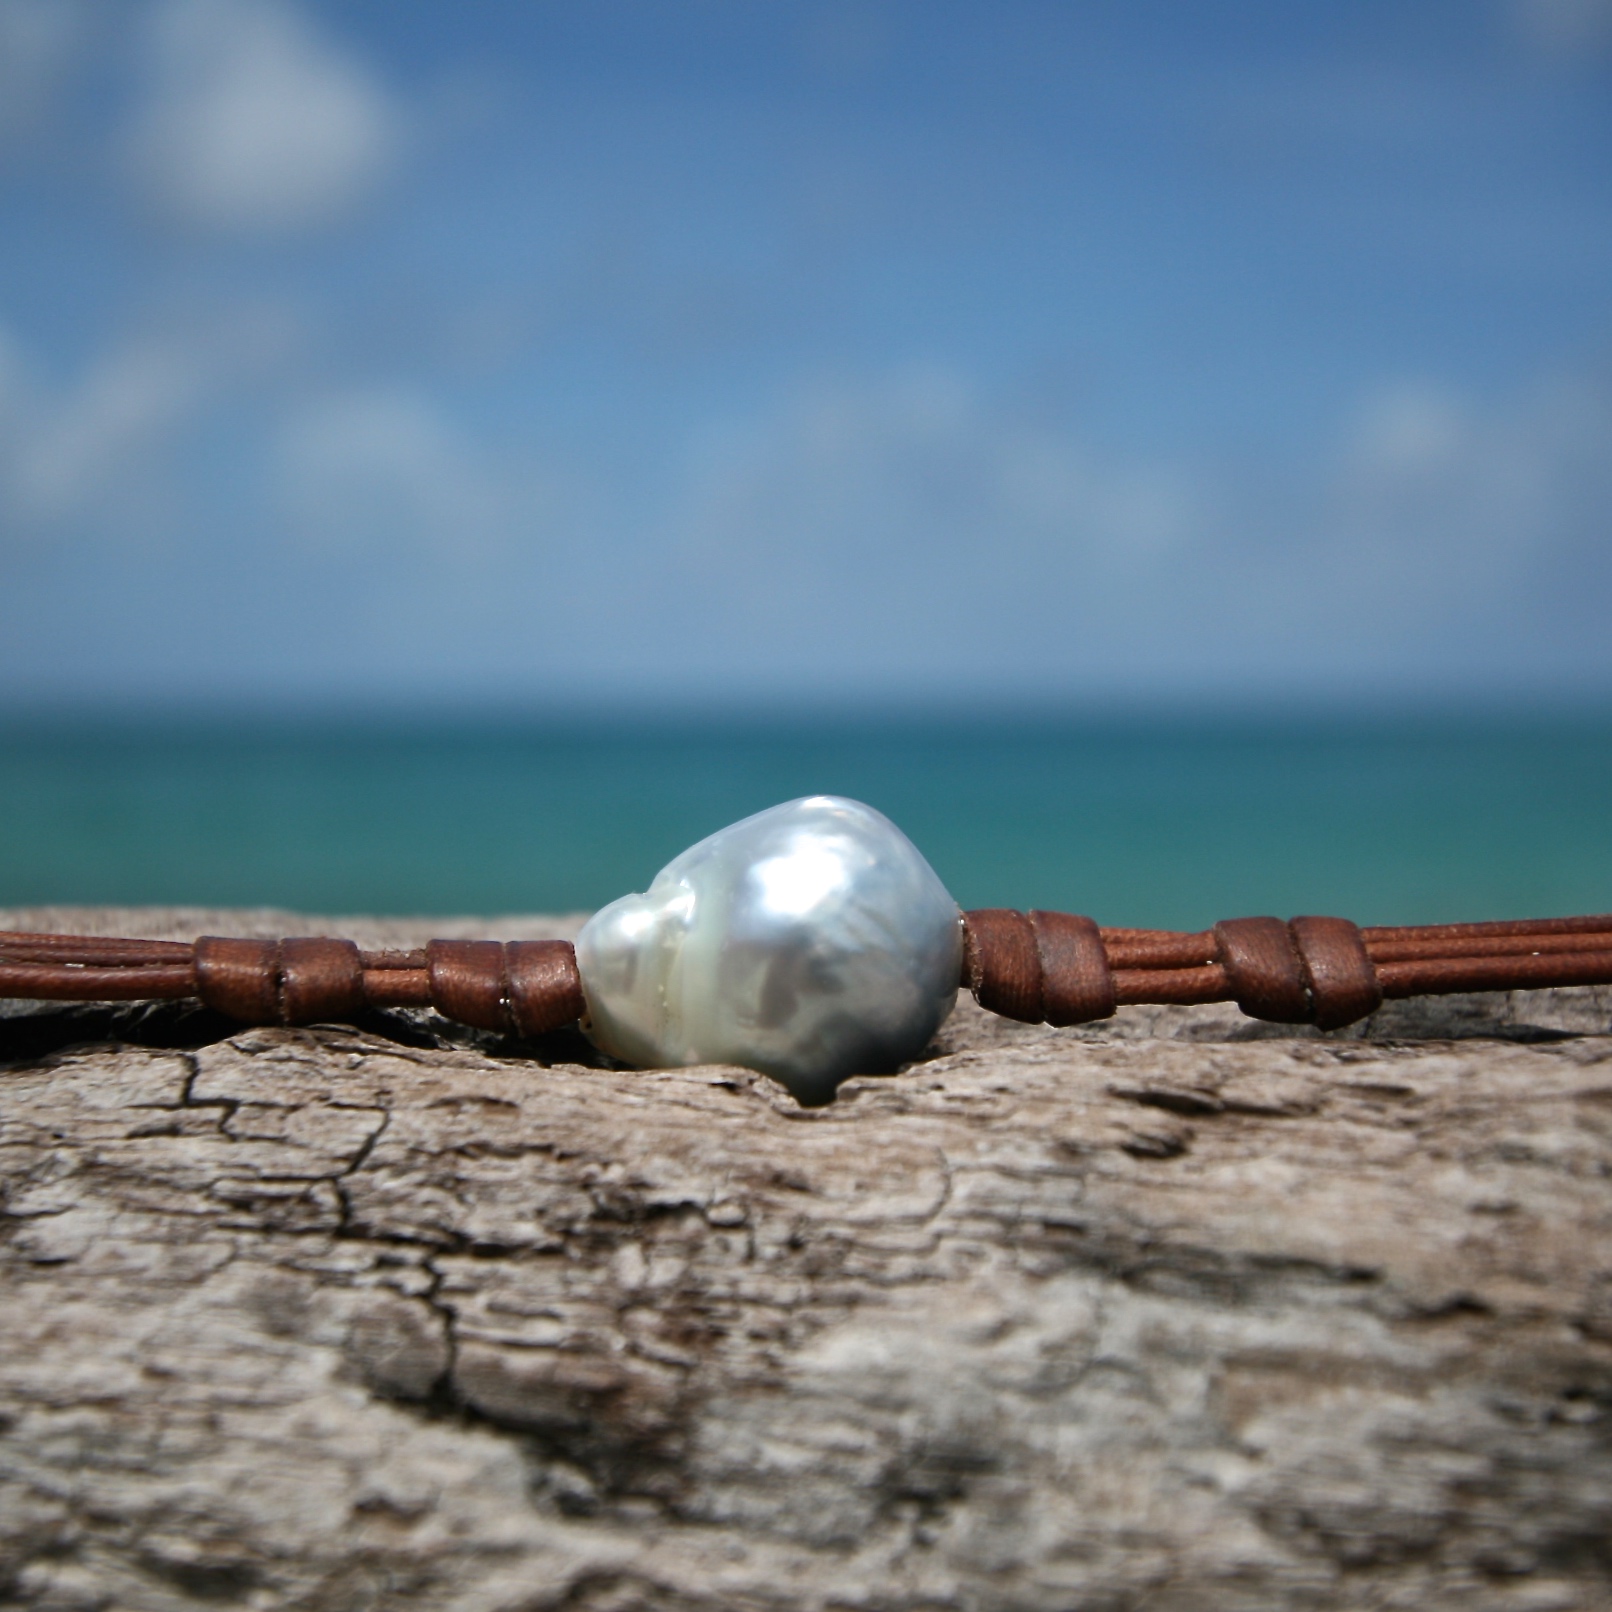 Pearls leather bracelet St Barth jewelry